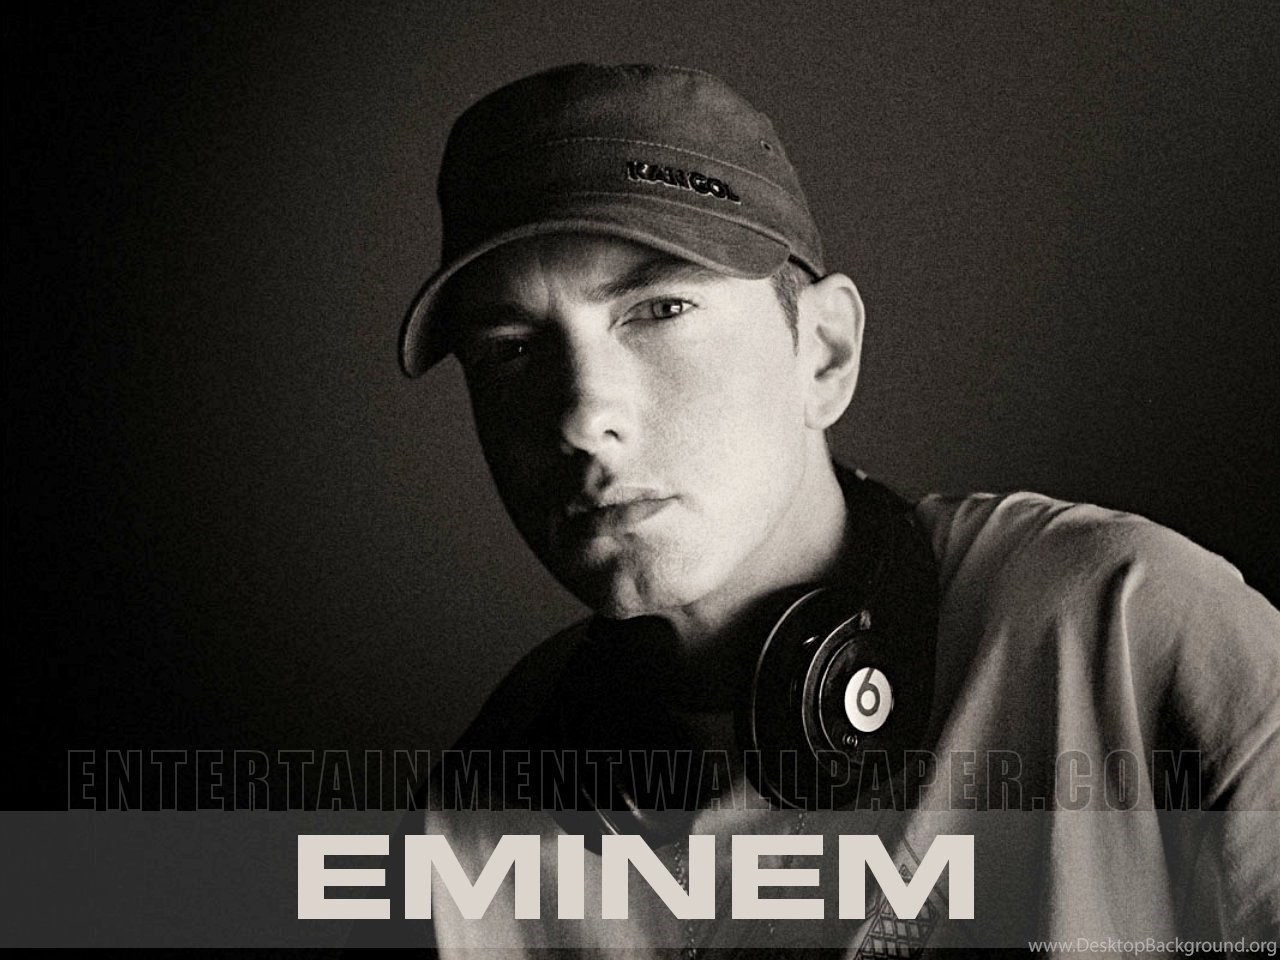 Eminem despicable freestyle